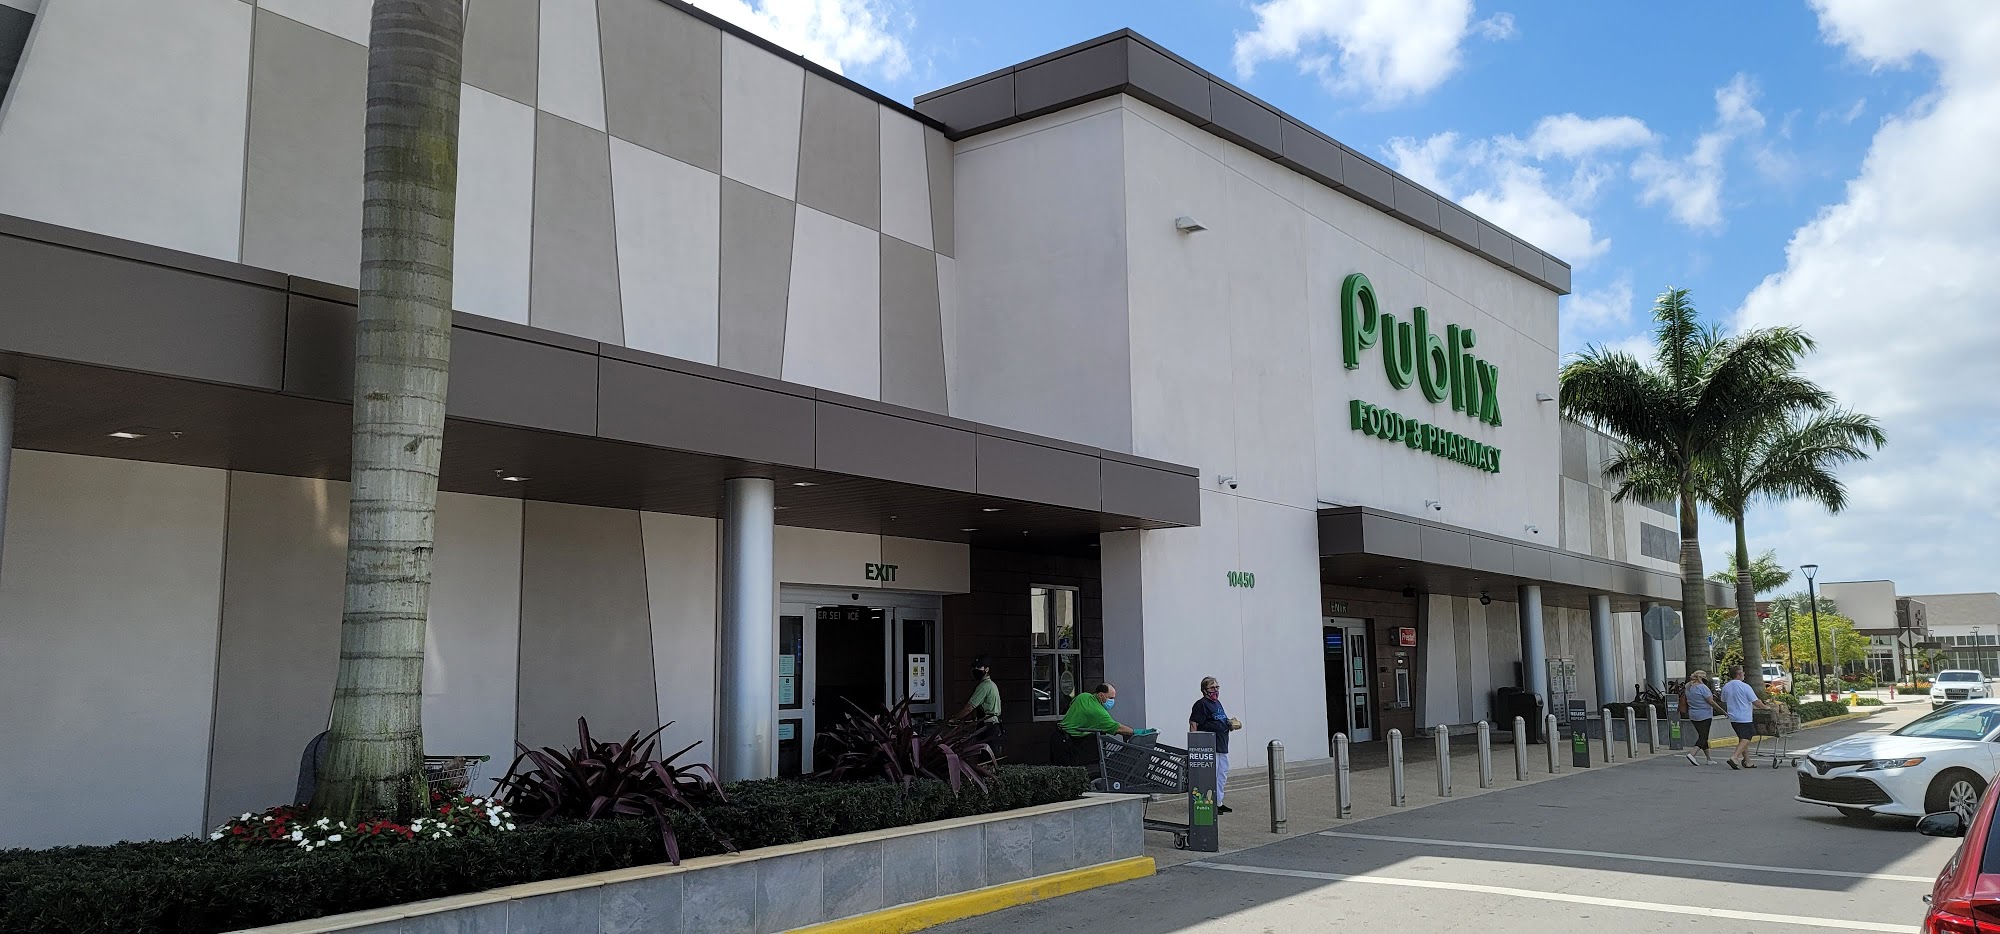 Publix Pharmacy at Pines City Center